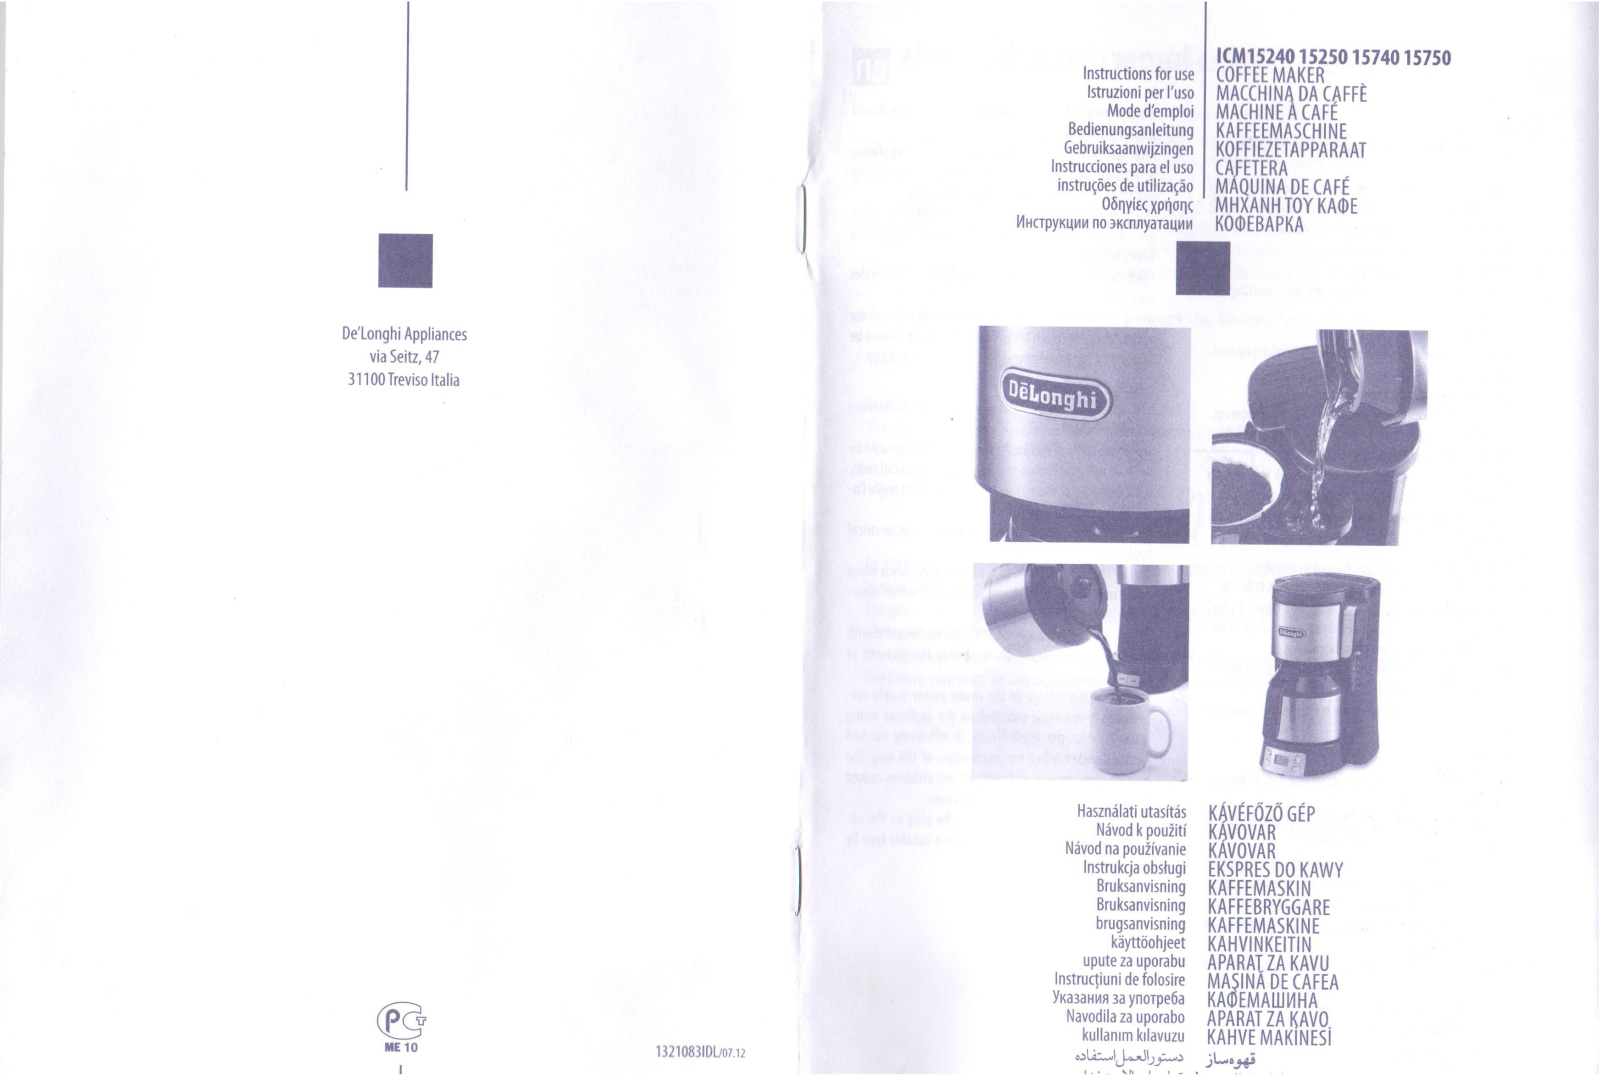 Delonghi ICM 15750 User Manual